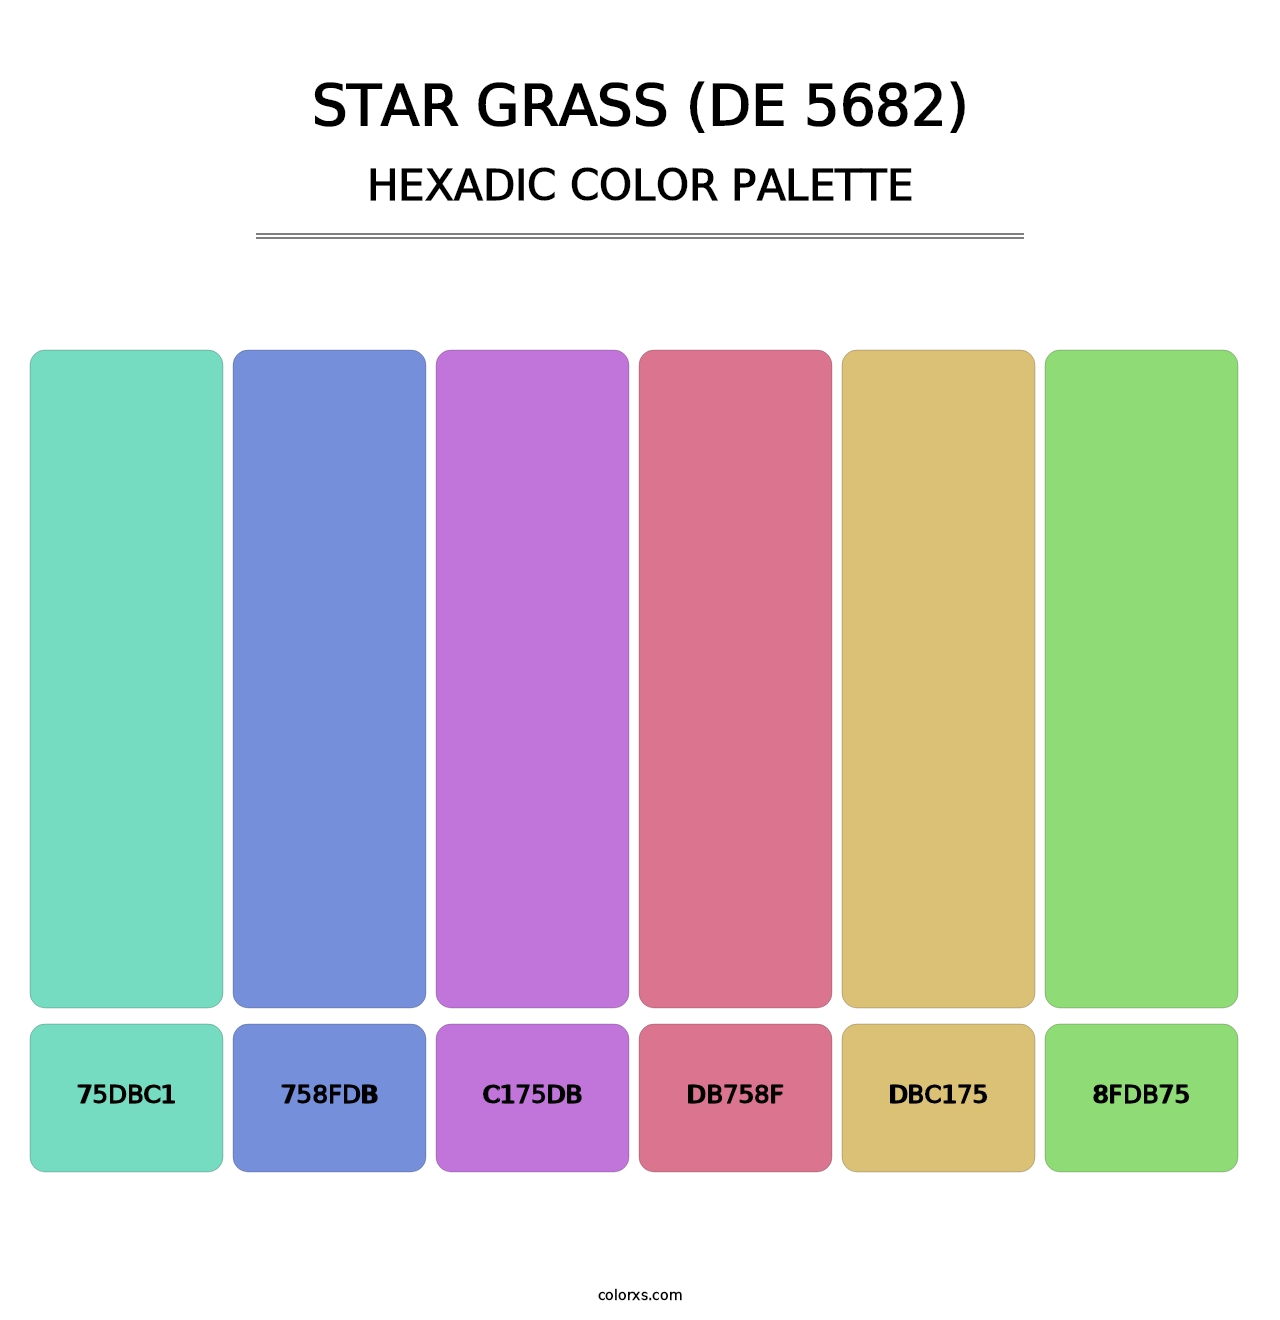 Star Grass (DE 5682) - Hexadic Color Palette